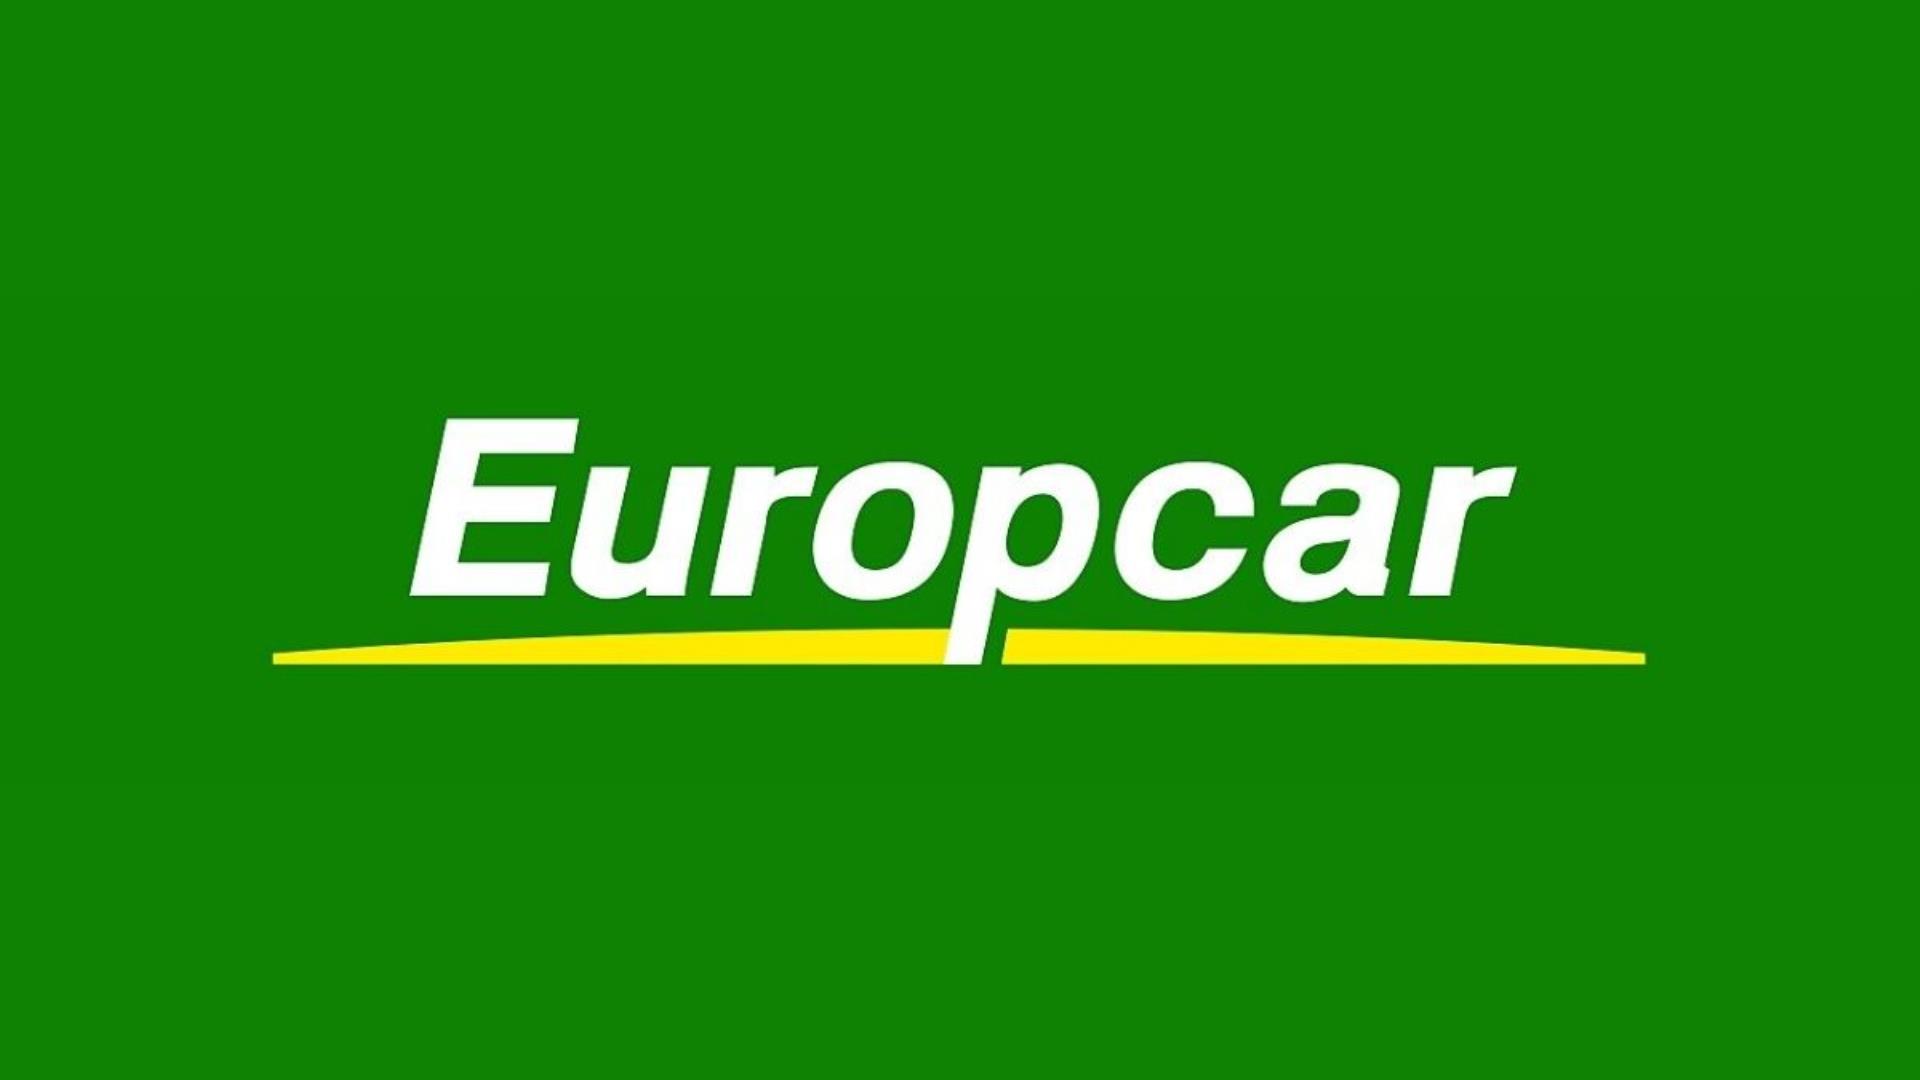 europcar location carcassonne